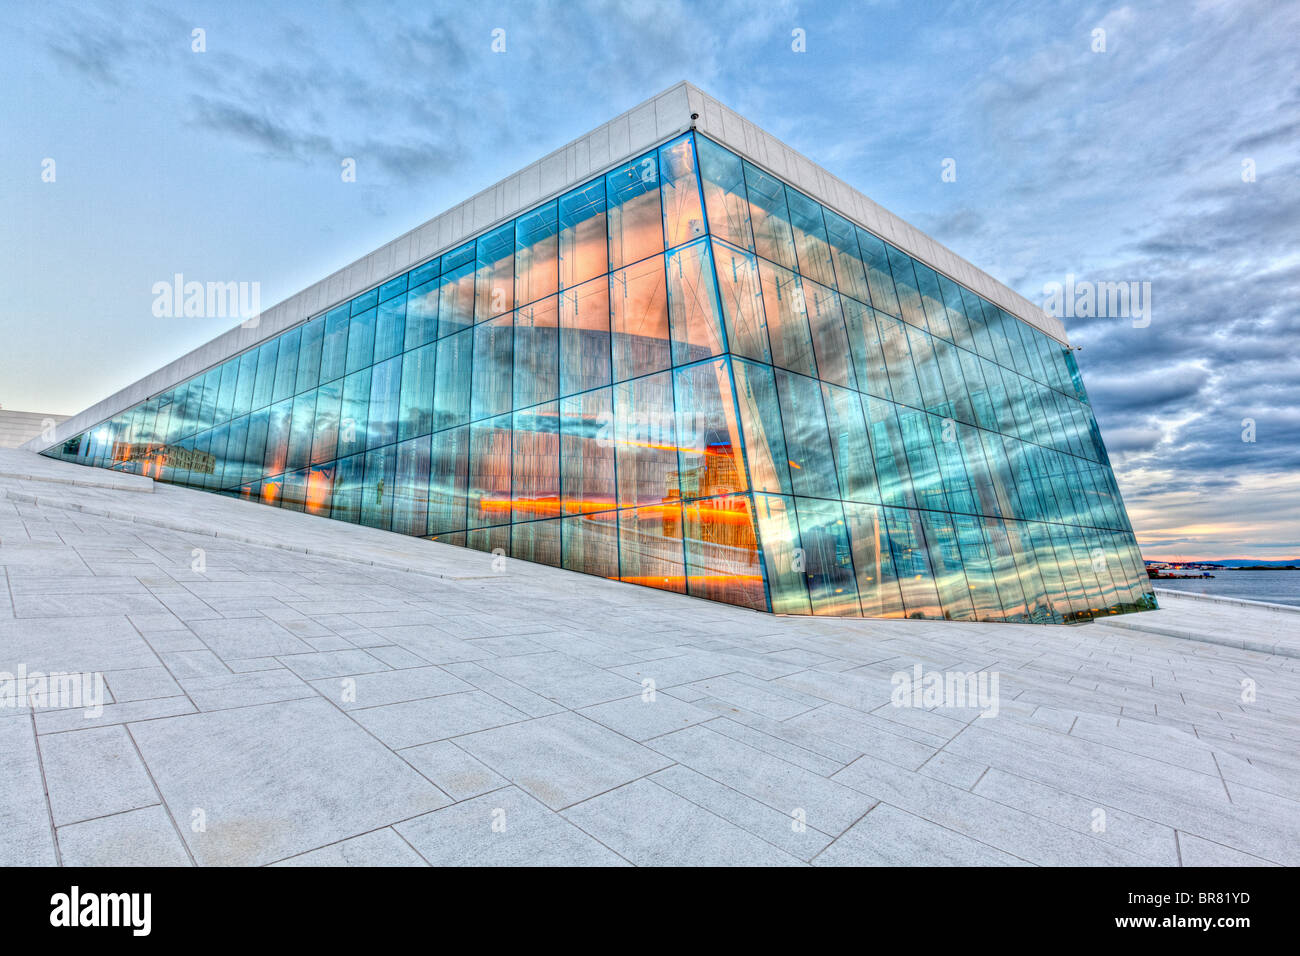 Den Norske Opera & Ballett: The Norwegian National Opera House in Oslo. Designed by the Norwegian architectural firm Snøhetta. Stock Photo